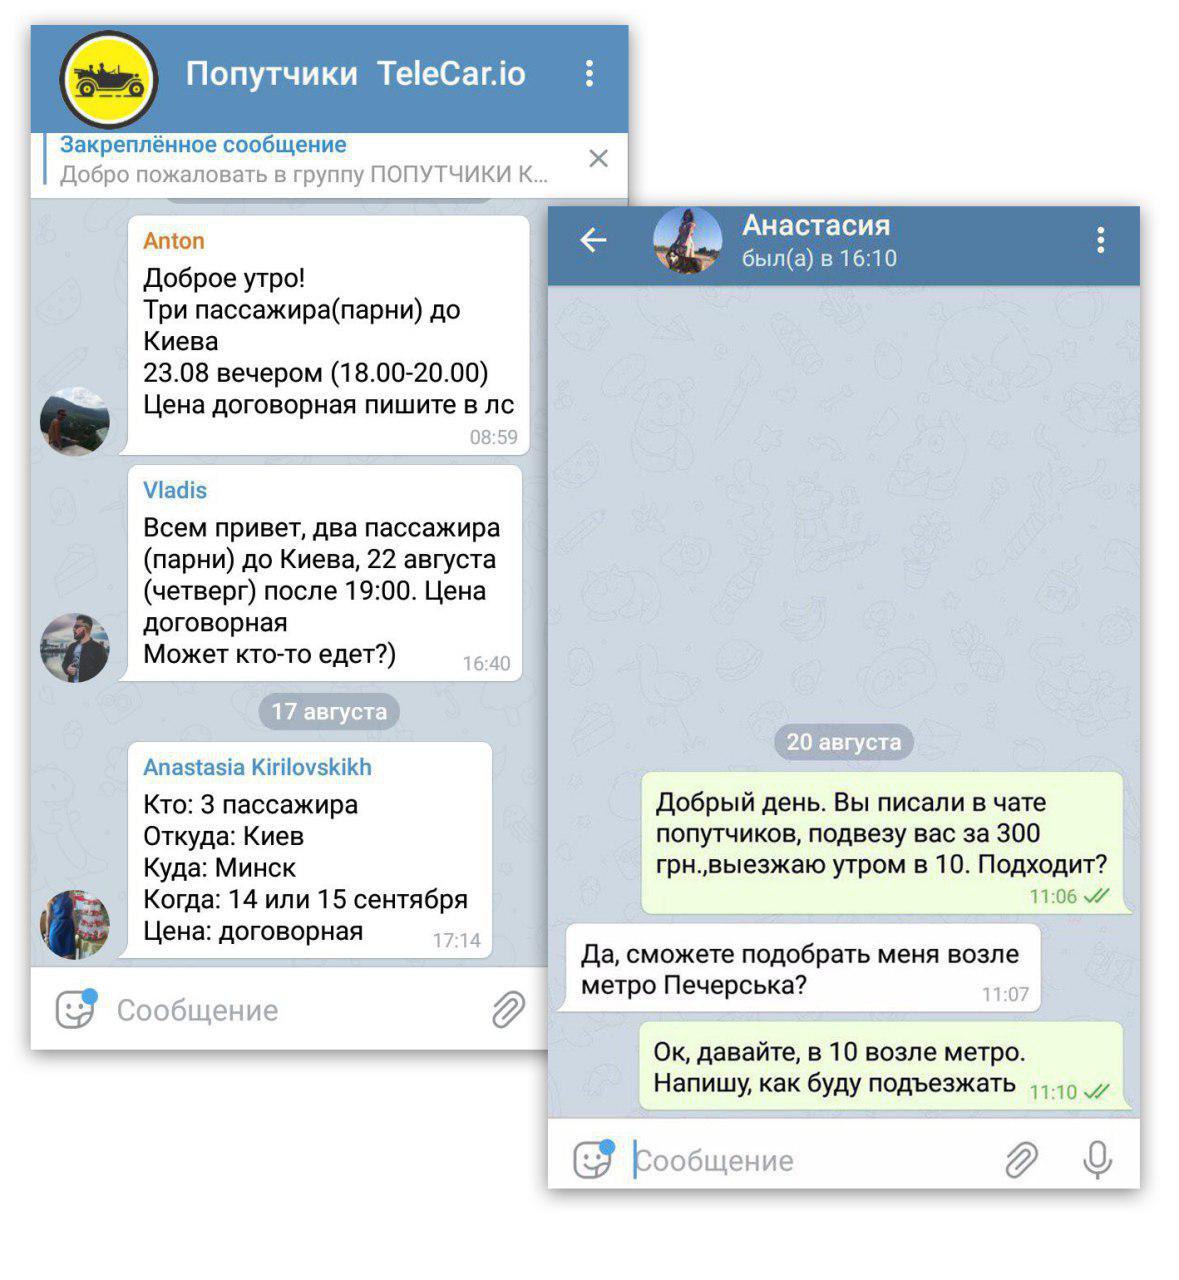 Telegram канал украины